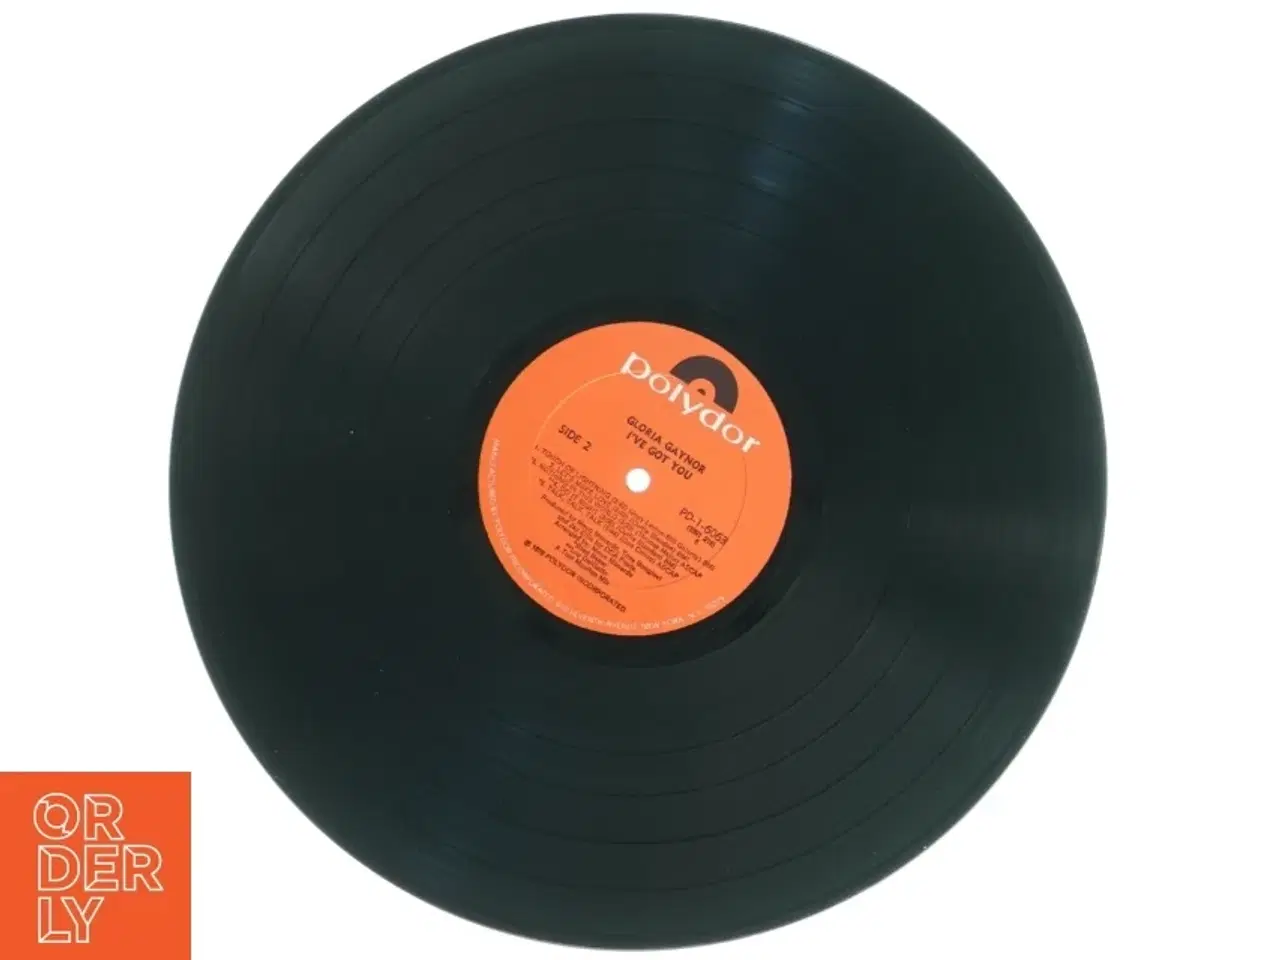 Billede 2 - Gloria Gaynor vinylplade fra Polydor (str. 31 x 31 cm)